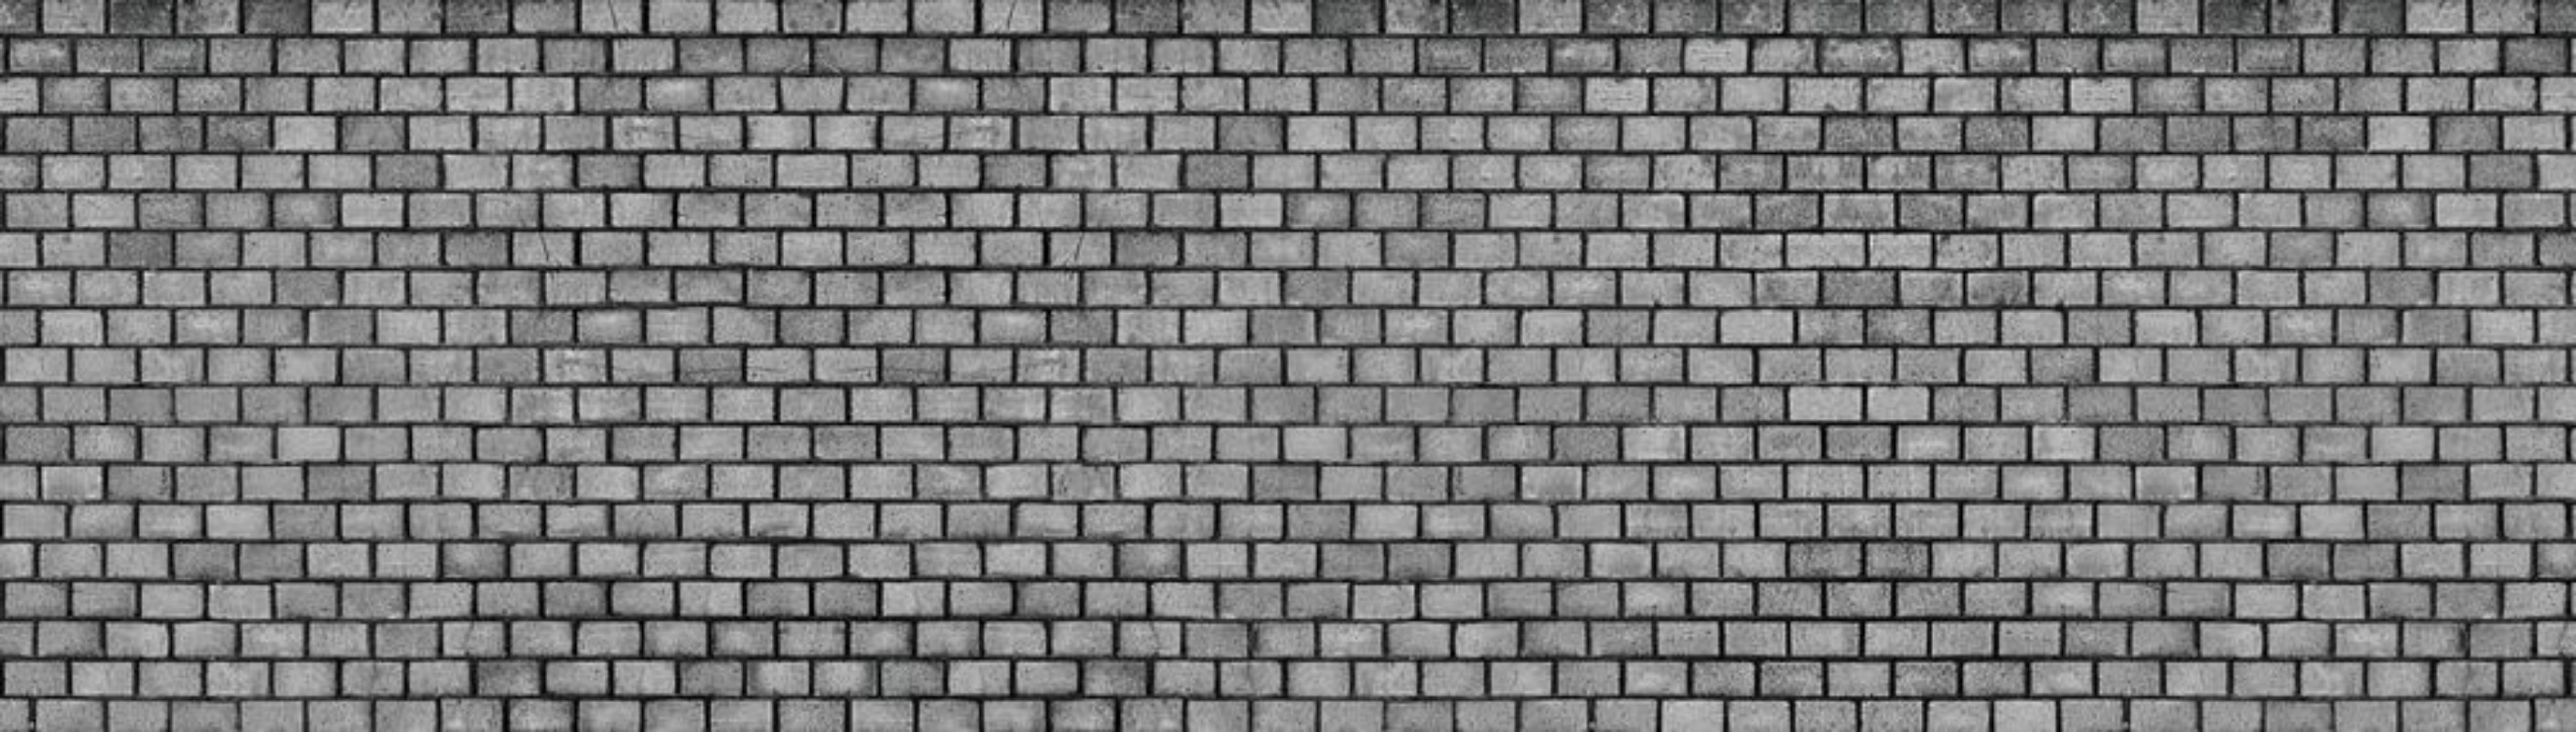 Bild på Dark brick wall texture of black stone blocks high resolution panorama